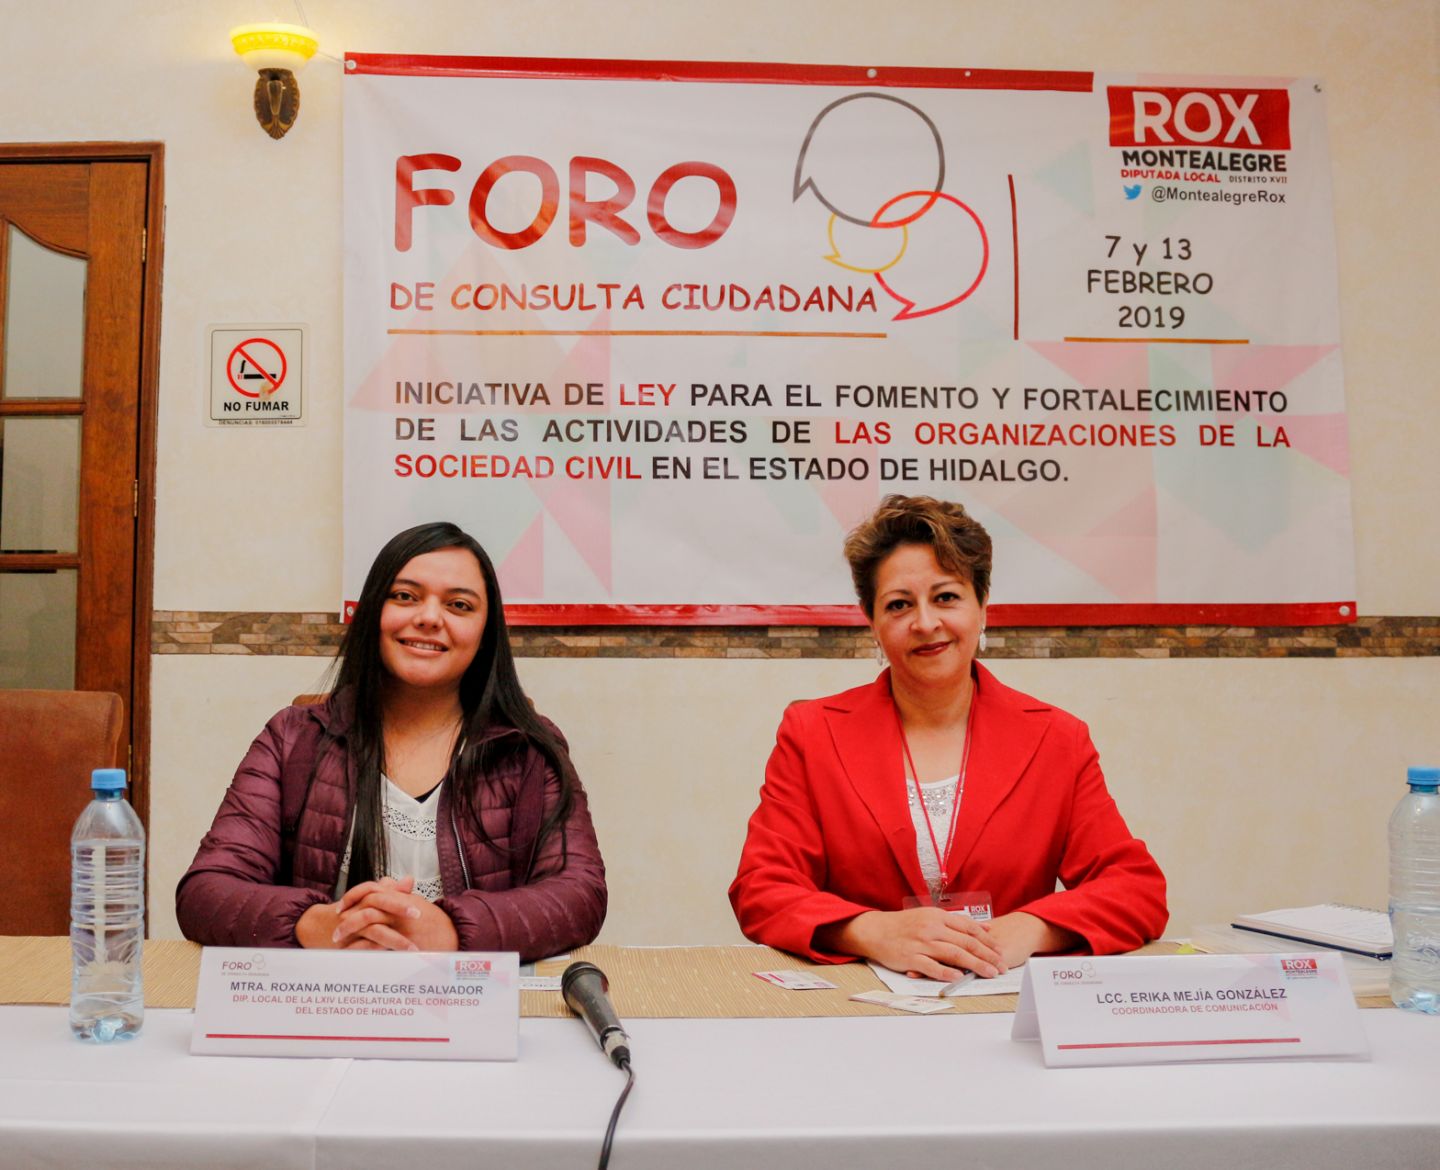 Participará Tatiana Clouthier en foro de consulta ciudadana próximo a realizarse en Hidalgo